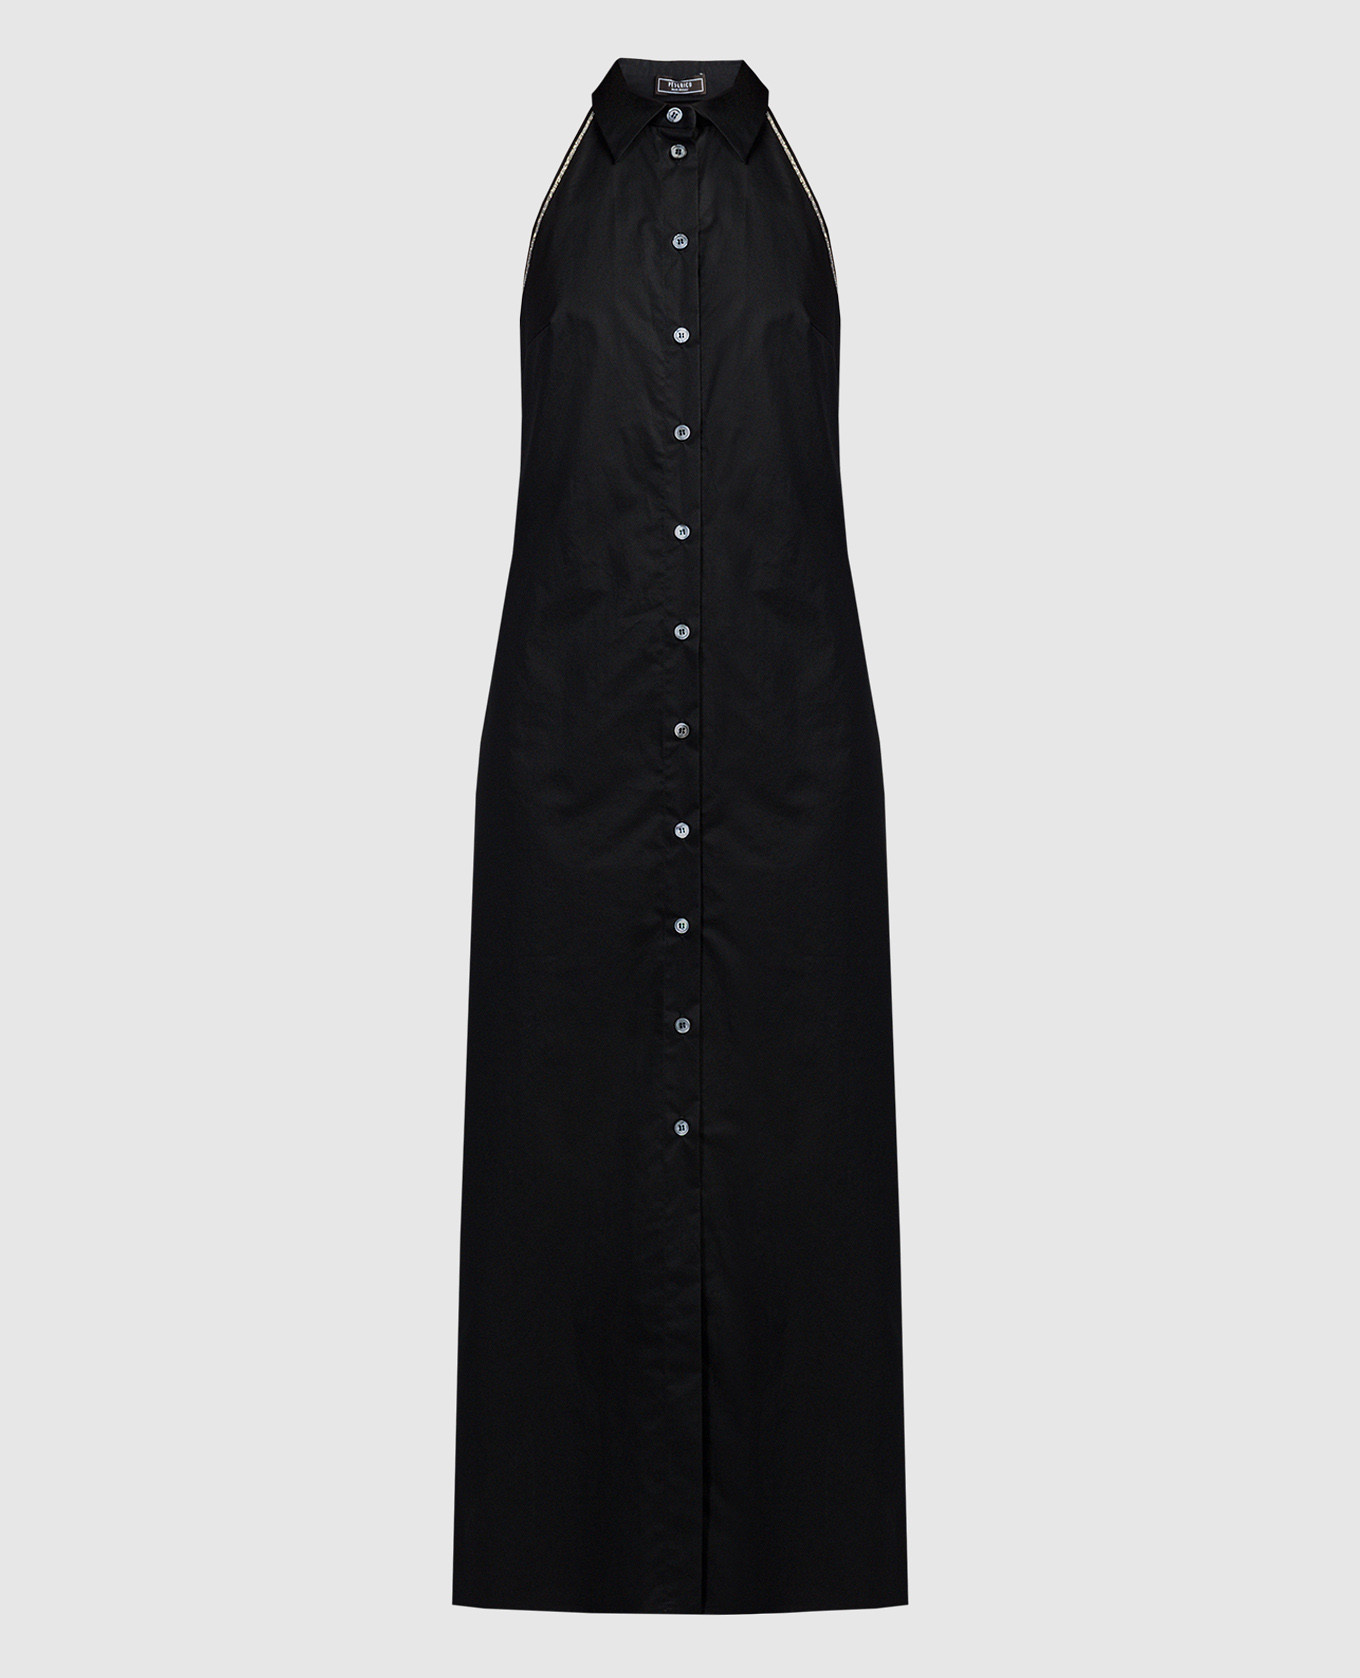 Black dress with monil chain